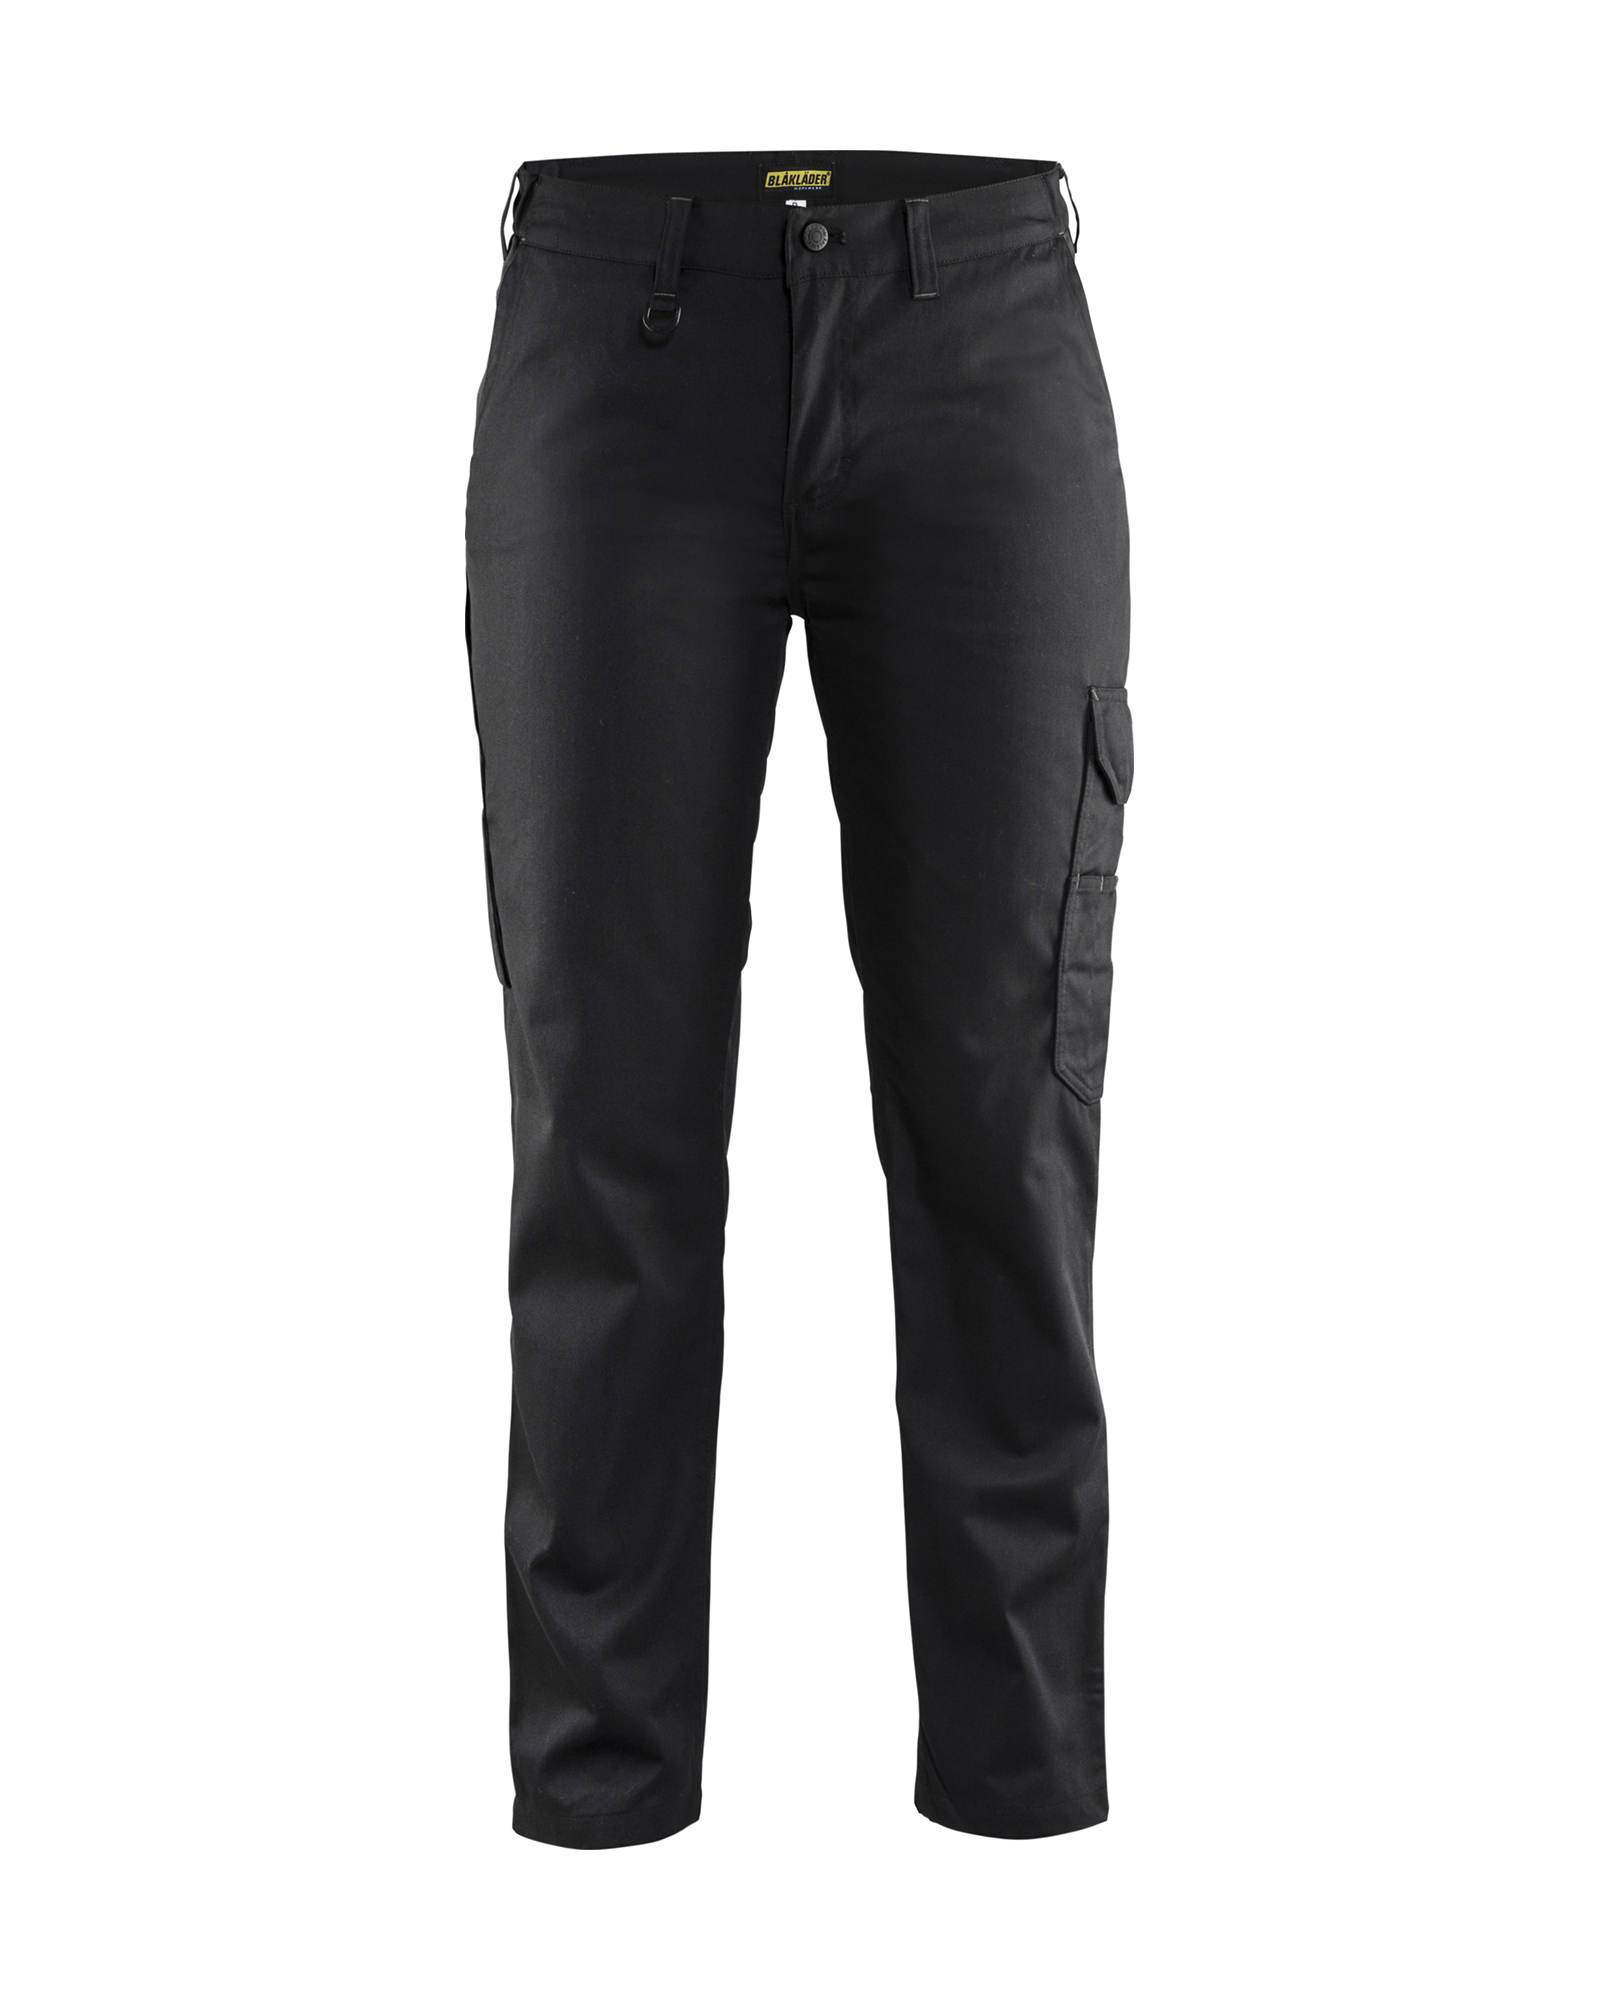 Pantalon Industrie femme Blåkläder 7104 Noir Blaklader - 710418009900C